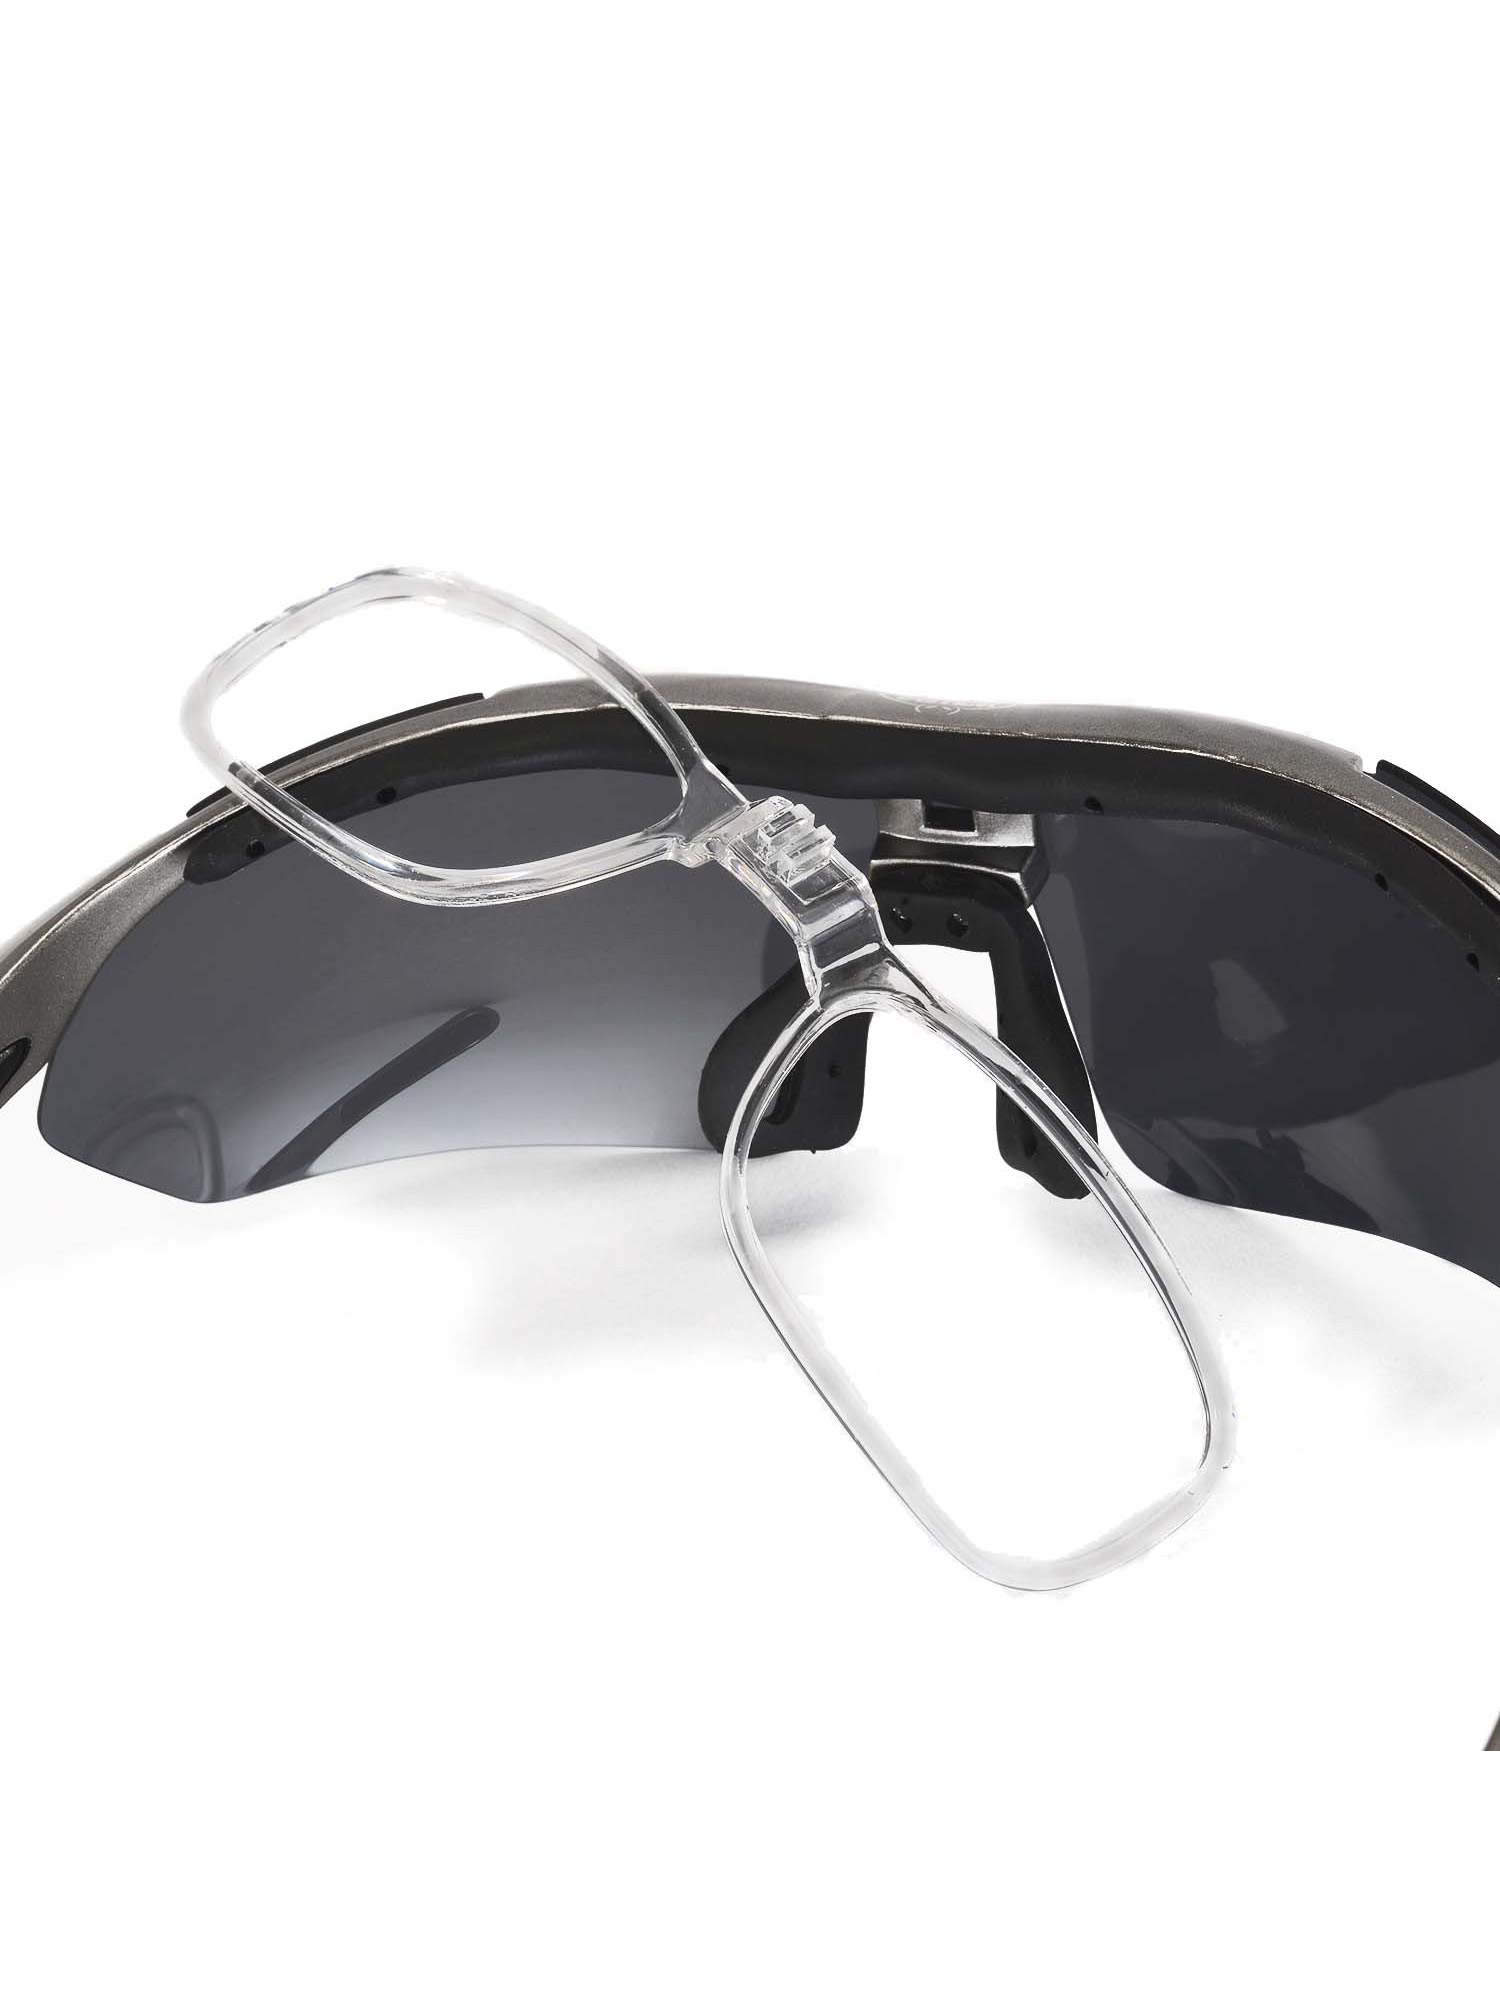 Walleva Polarized Sports Sunglasses With TR90 Frame - Multiple Options Available (Titanium Mirror Coated - Polarized) - image 2 of 8